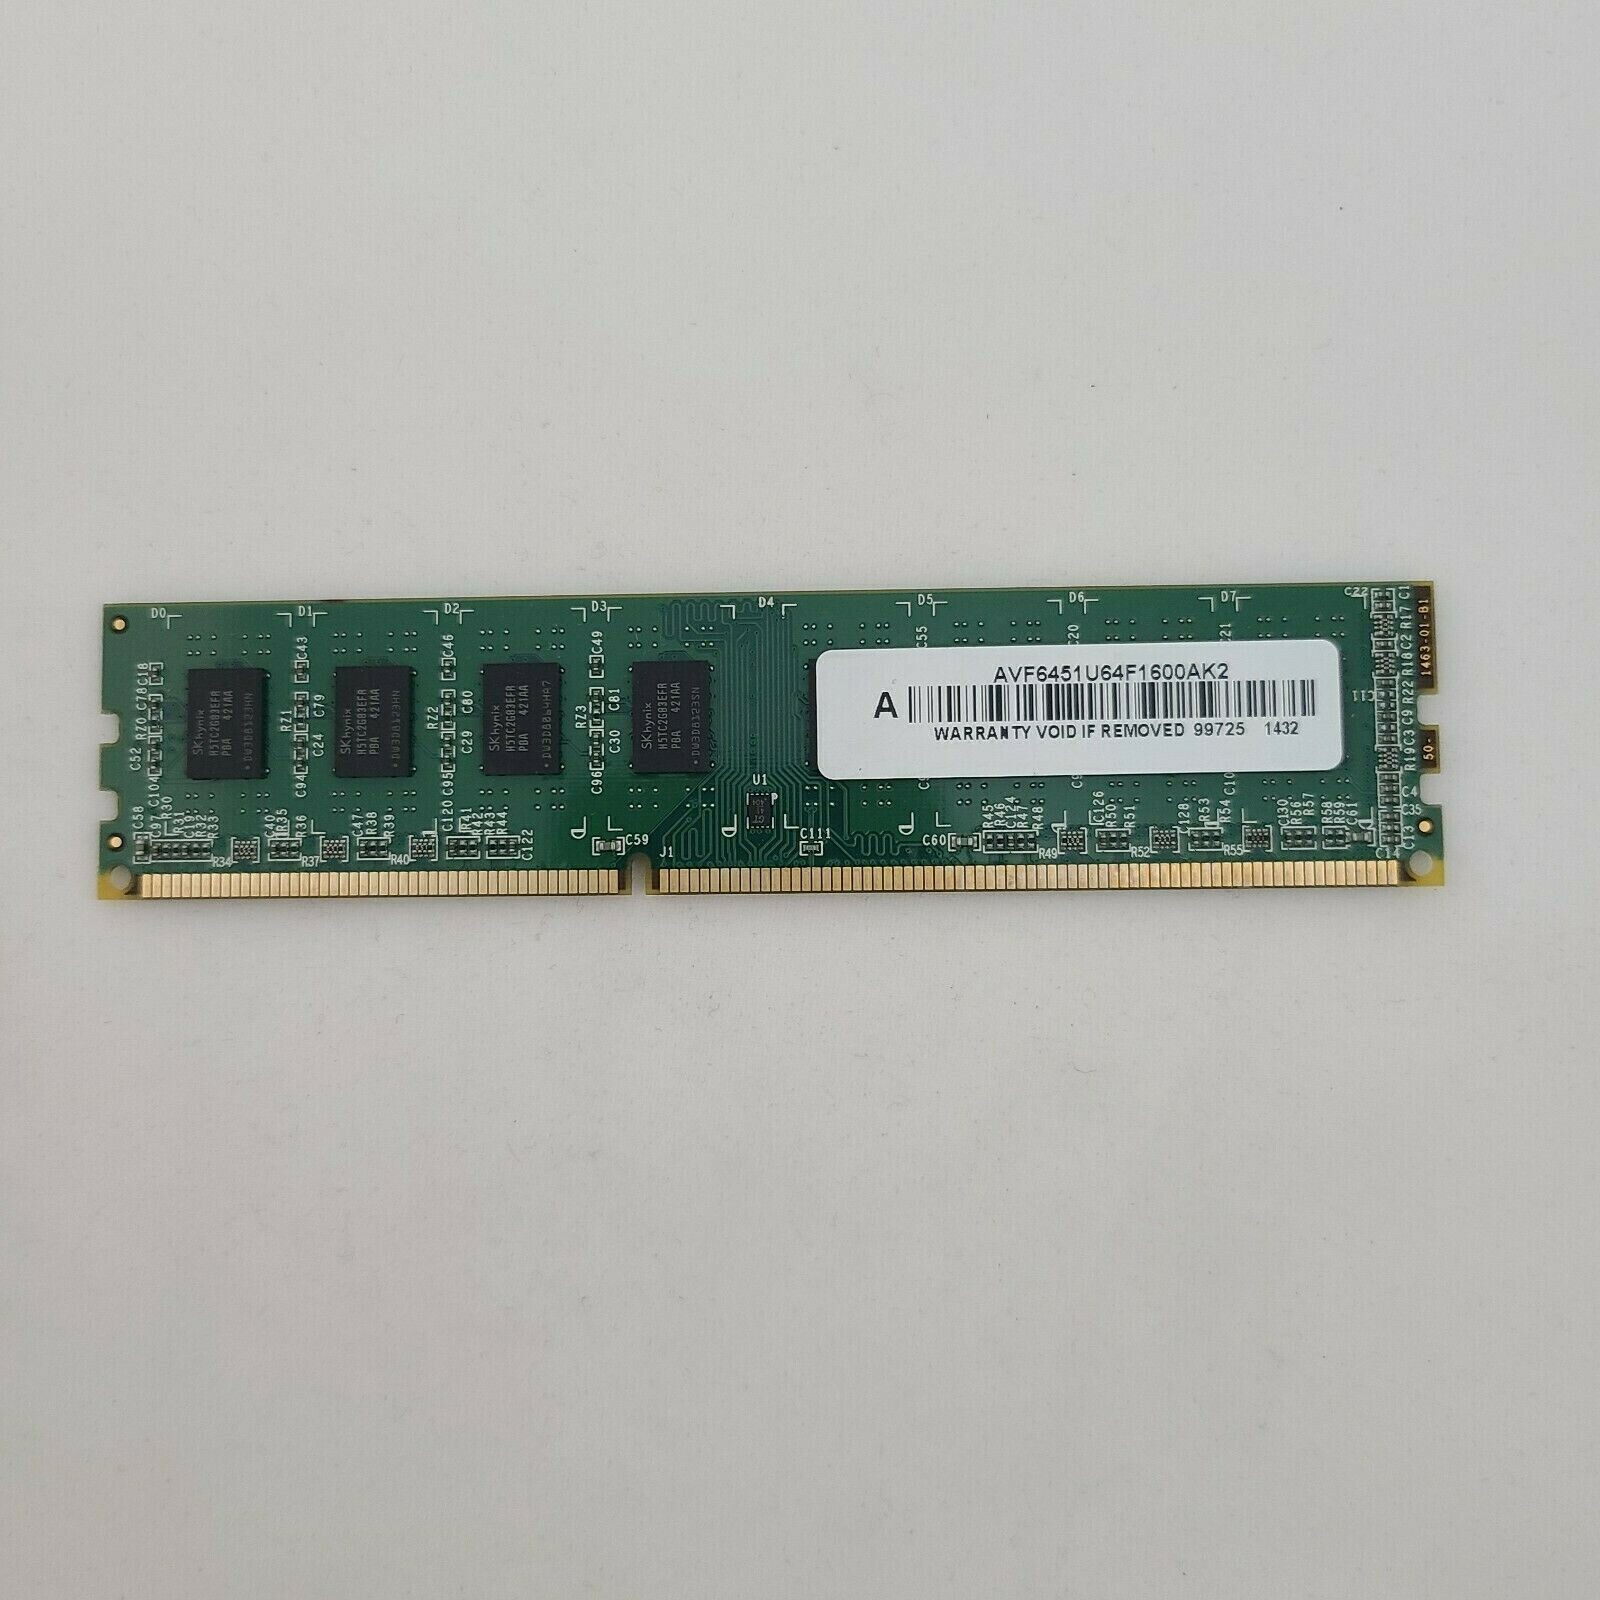 Avant 4GB (1-Stick) DDR3-1600 PC3-12800U UDIMM Memory AVF6451U64F1600AK2